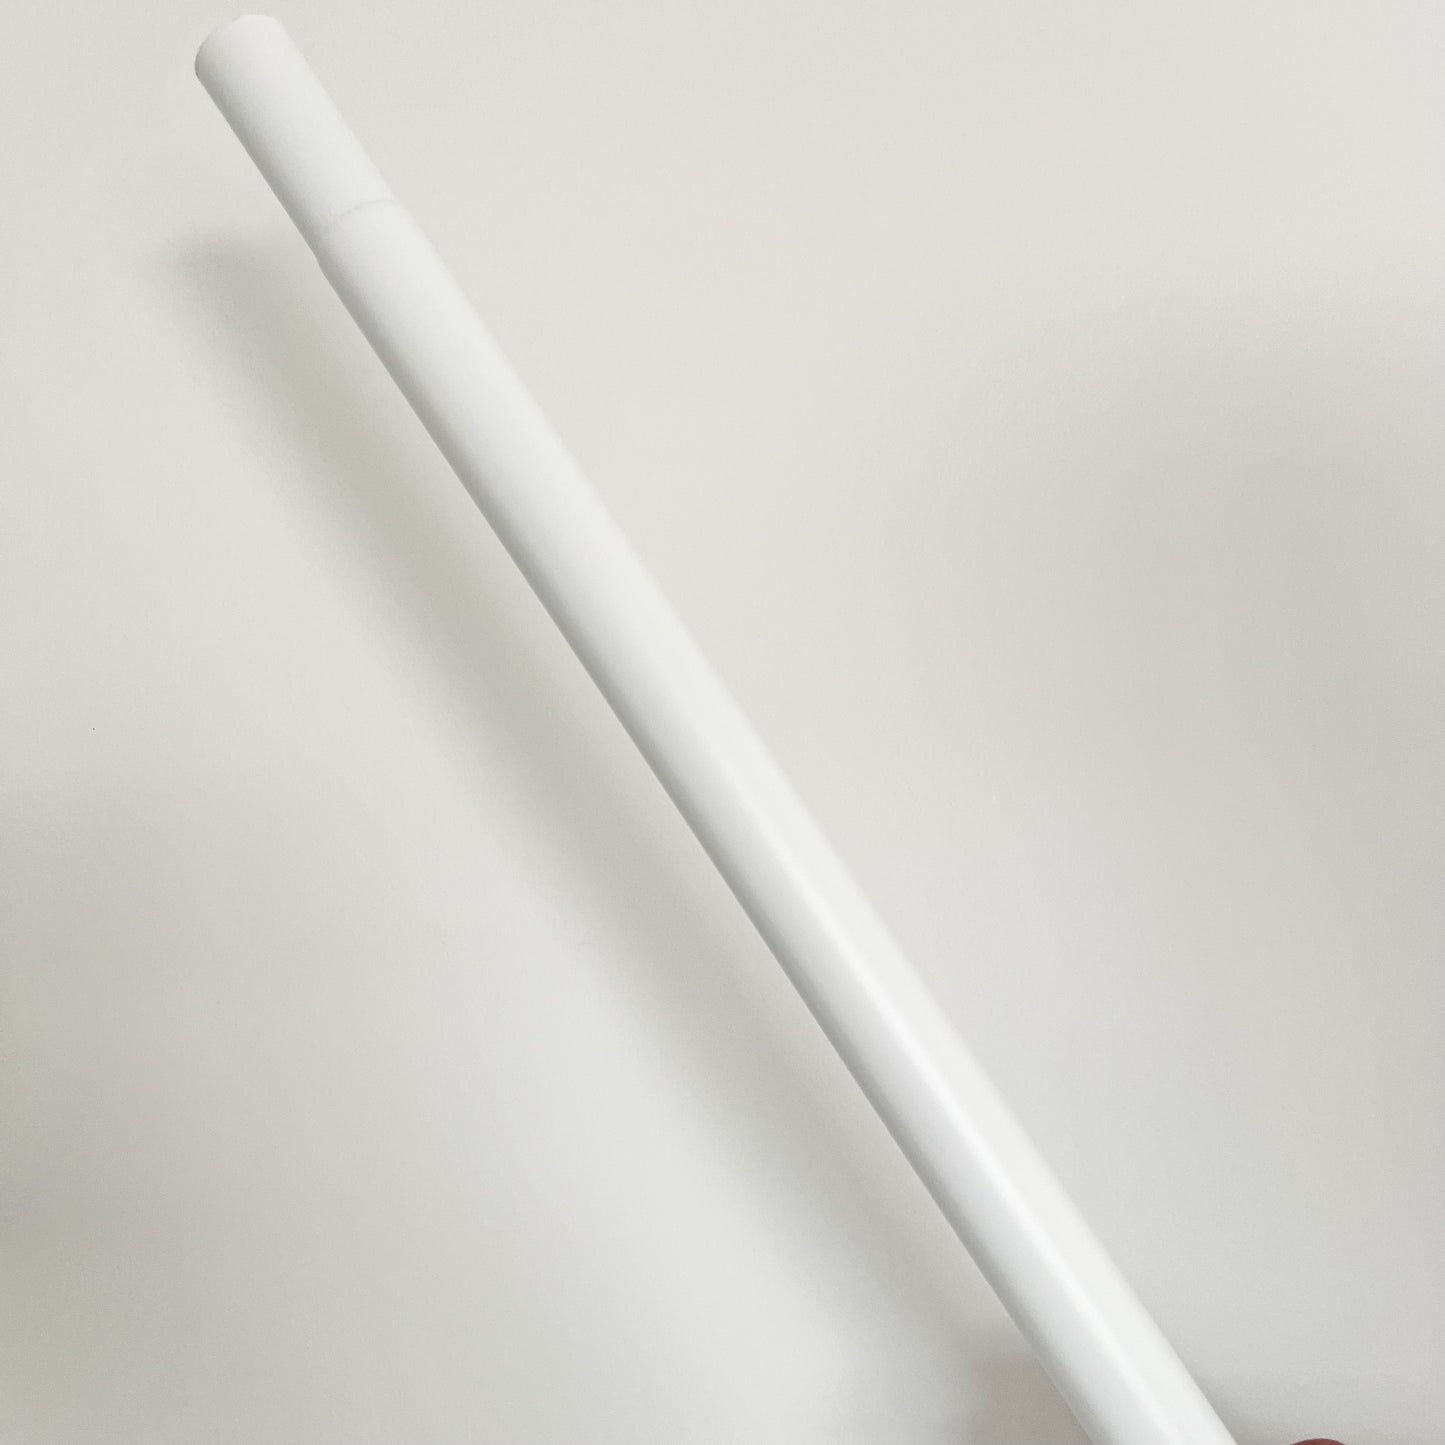 Tension Plant Pole Extension - White